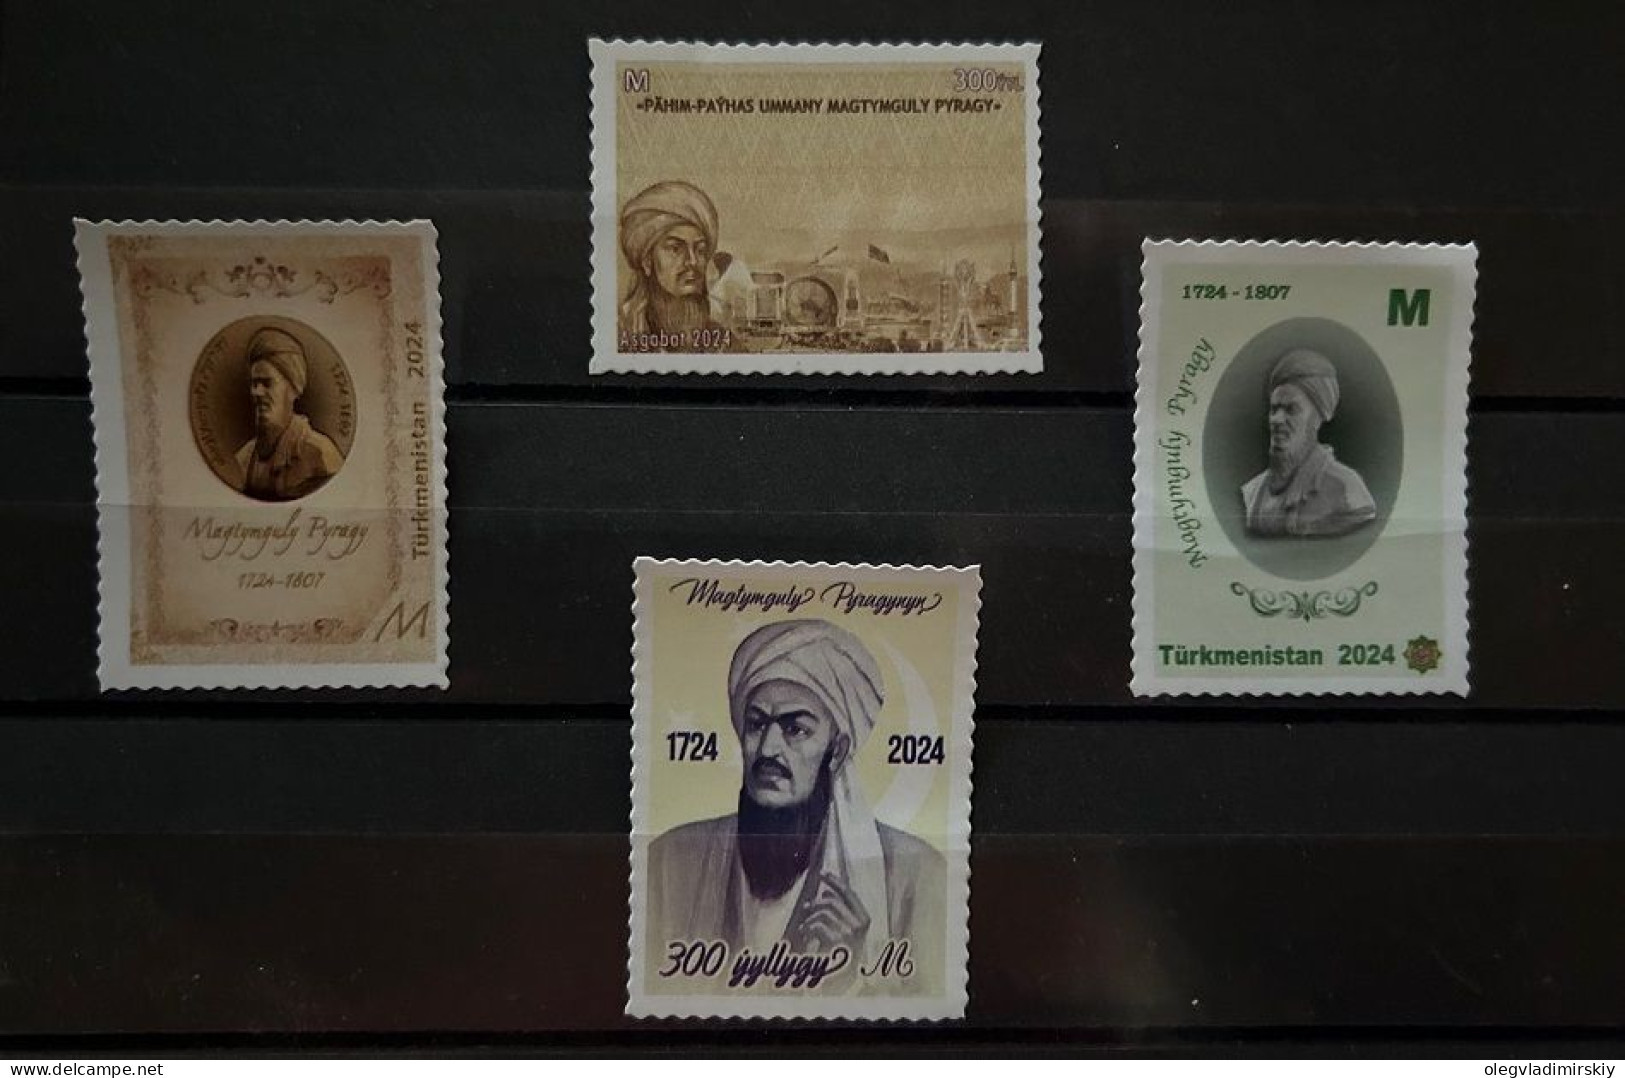 Turkmenistan 2024 Magtymguly Maxdumqoli Faraği مخدومقلی فراغی Great Poet Philosopher Set Of 4 Stamps MNH - Turkmenistán